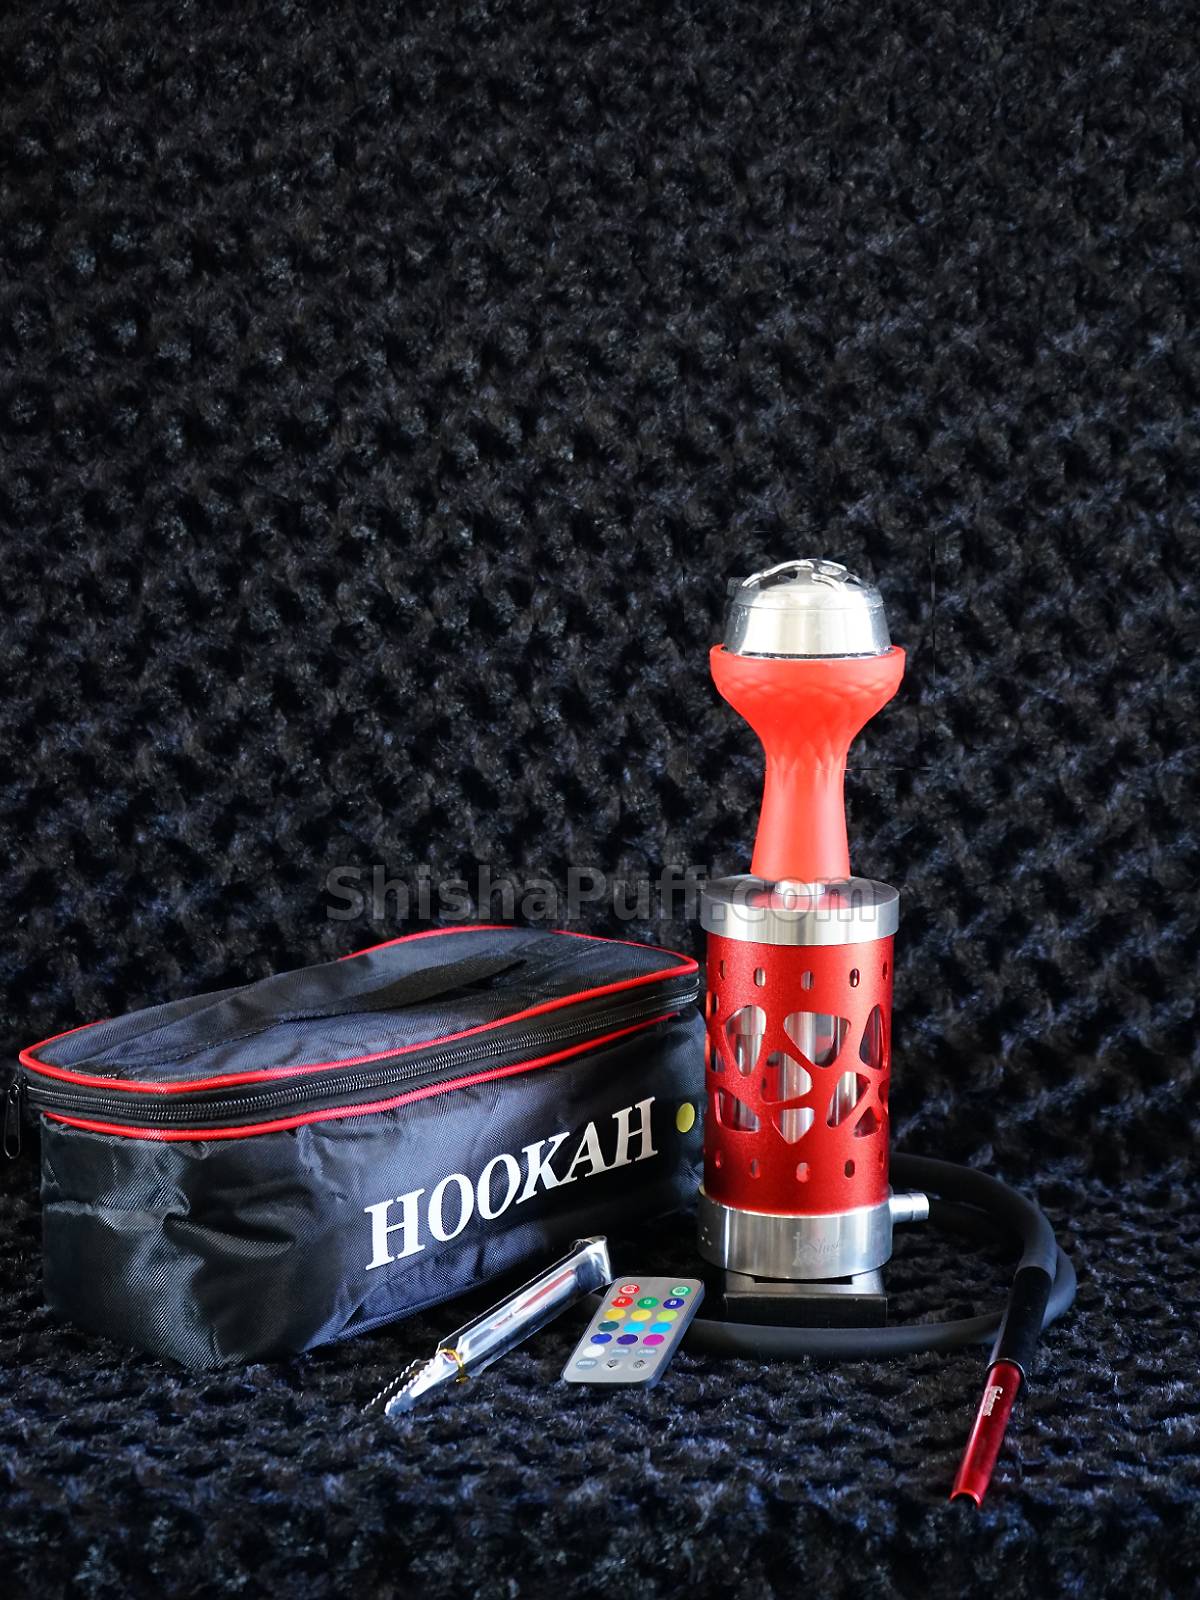 Portable Hookah Red Stone ShishaPuff R25-77